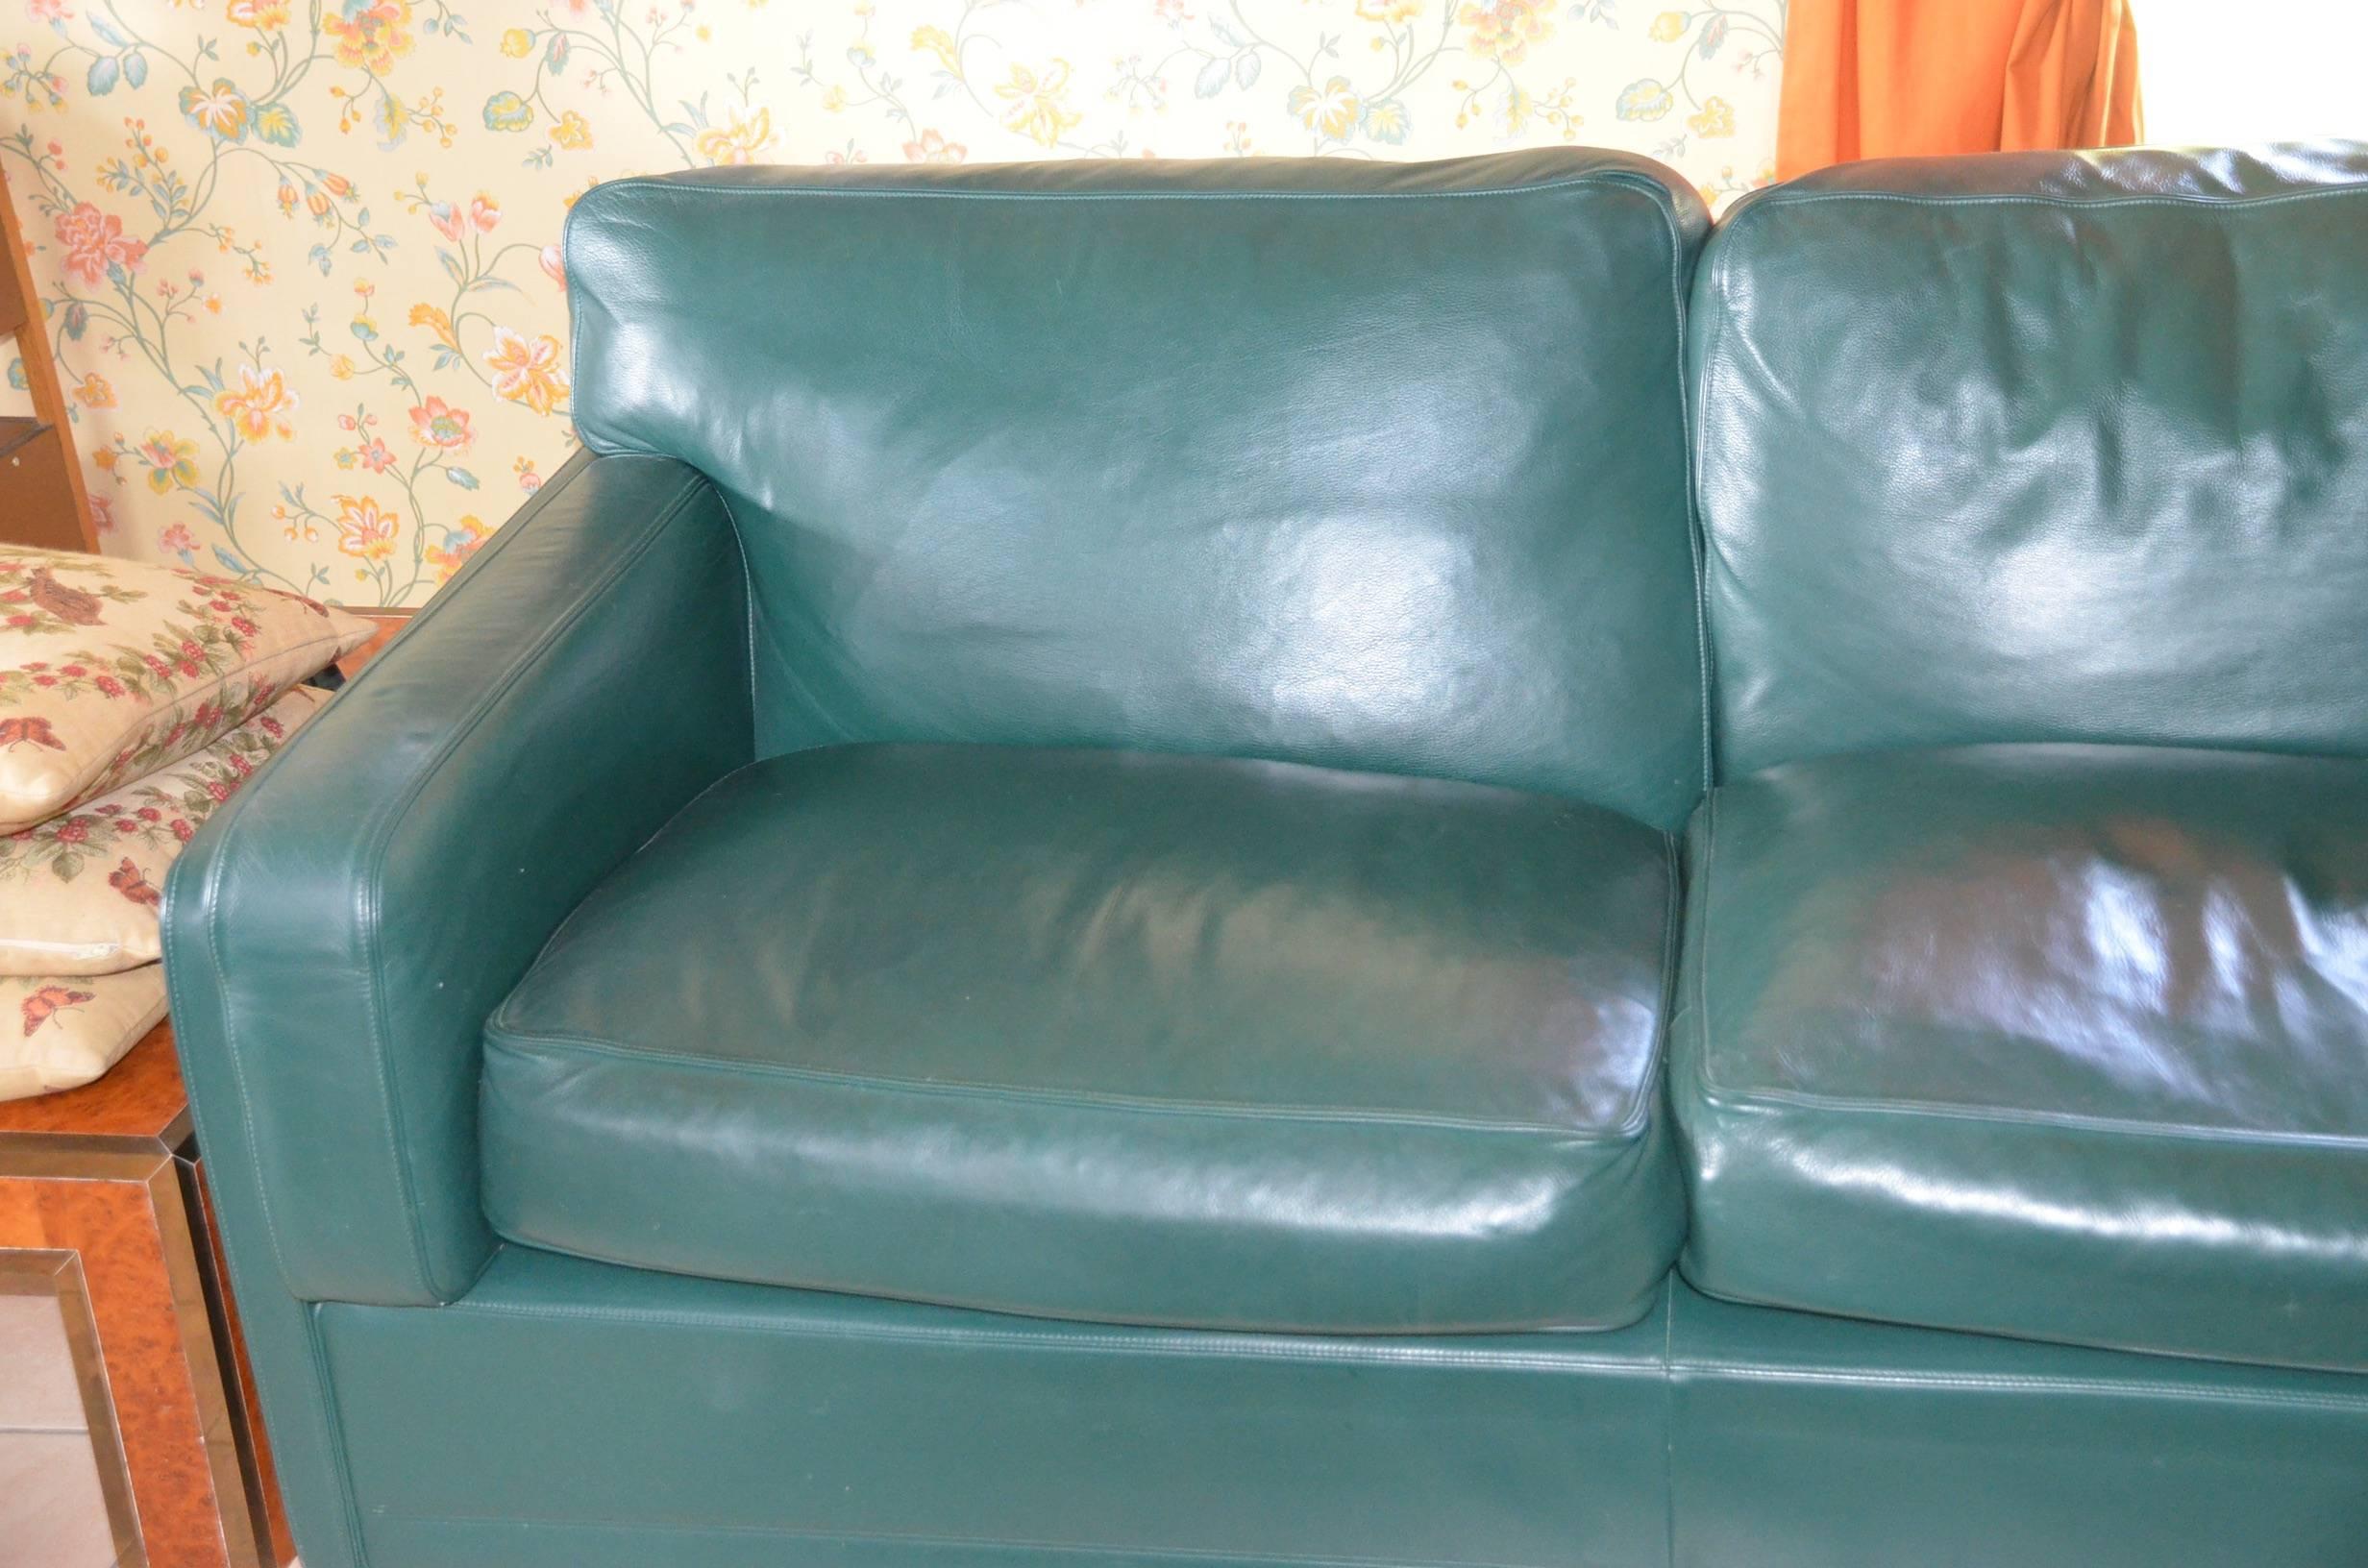 20th Century Three-Seat Leather Sofa 'Socrate' by Poltrona Frau, Italy